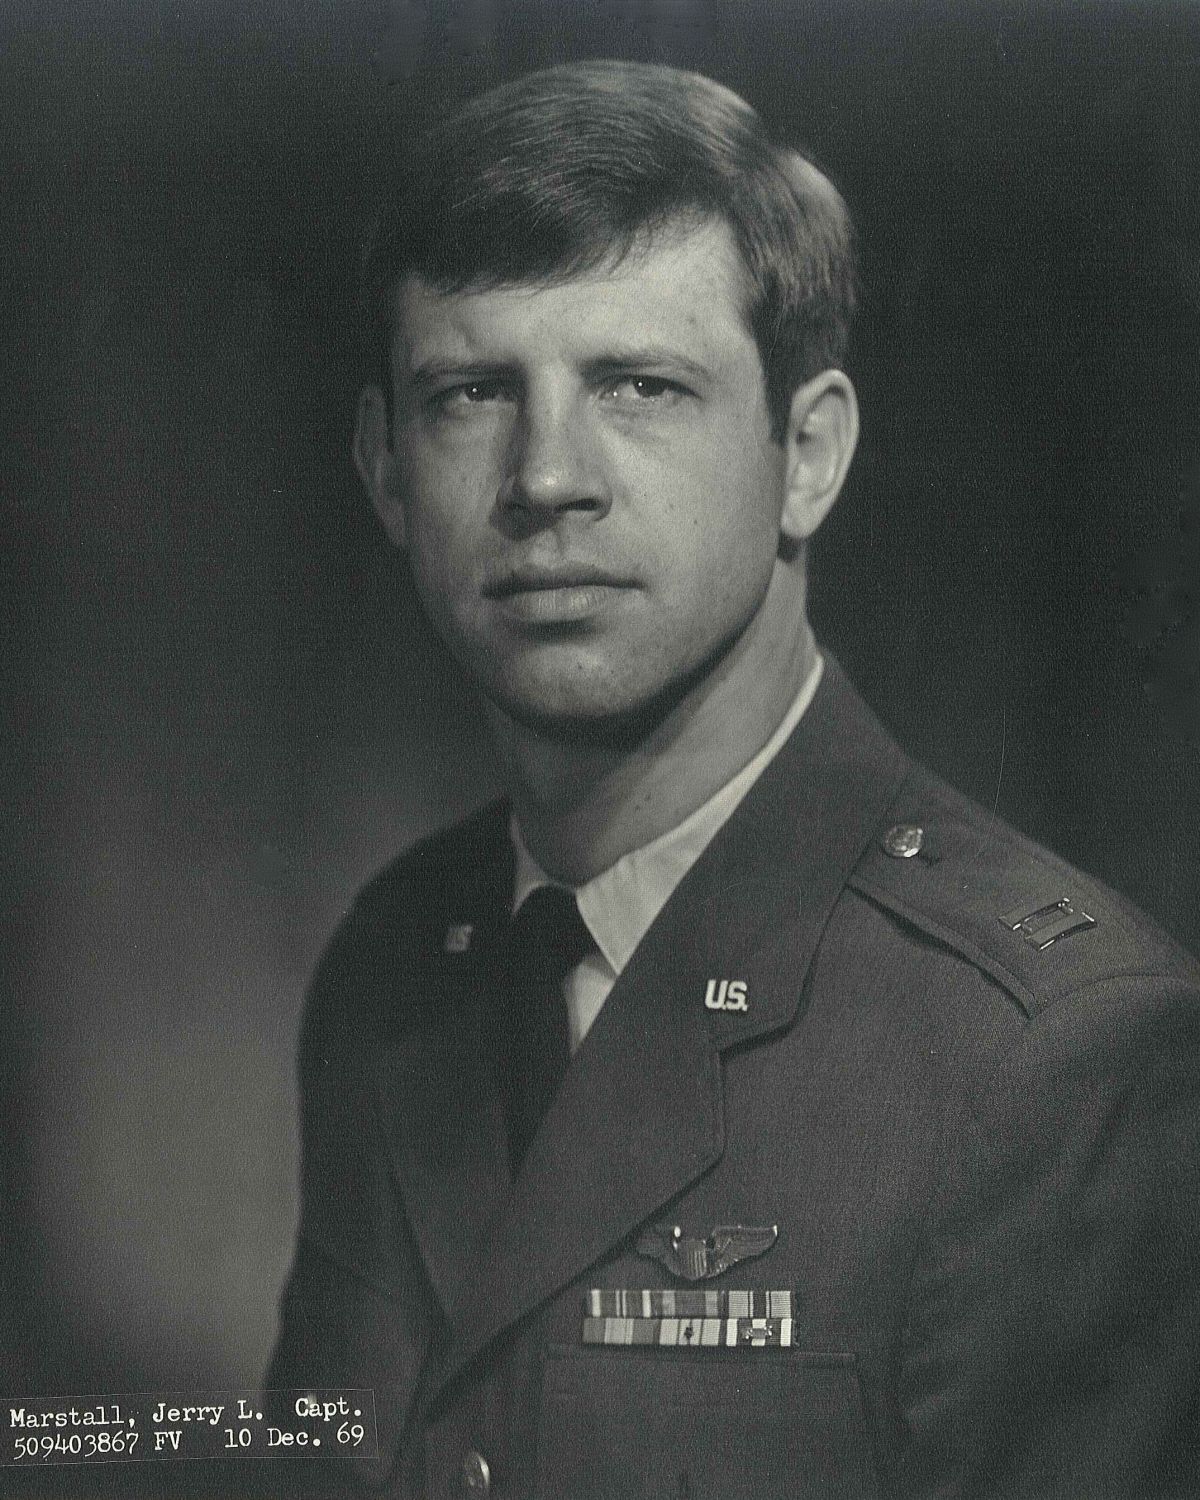 Capt. Jerry L Marstall